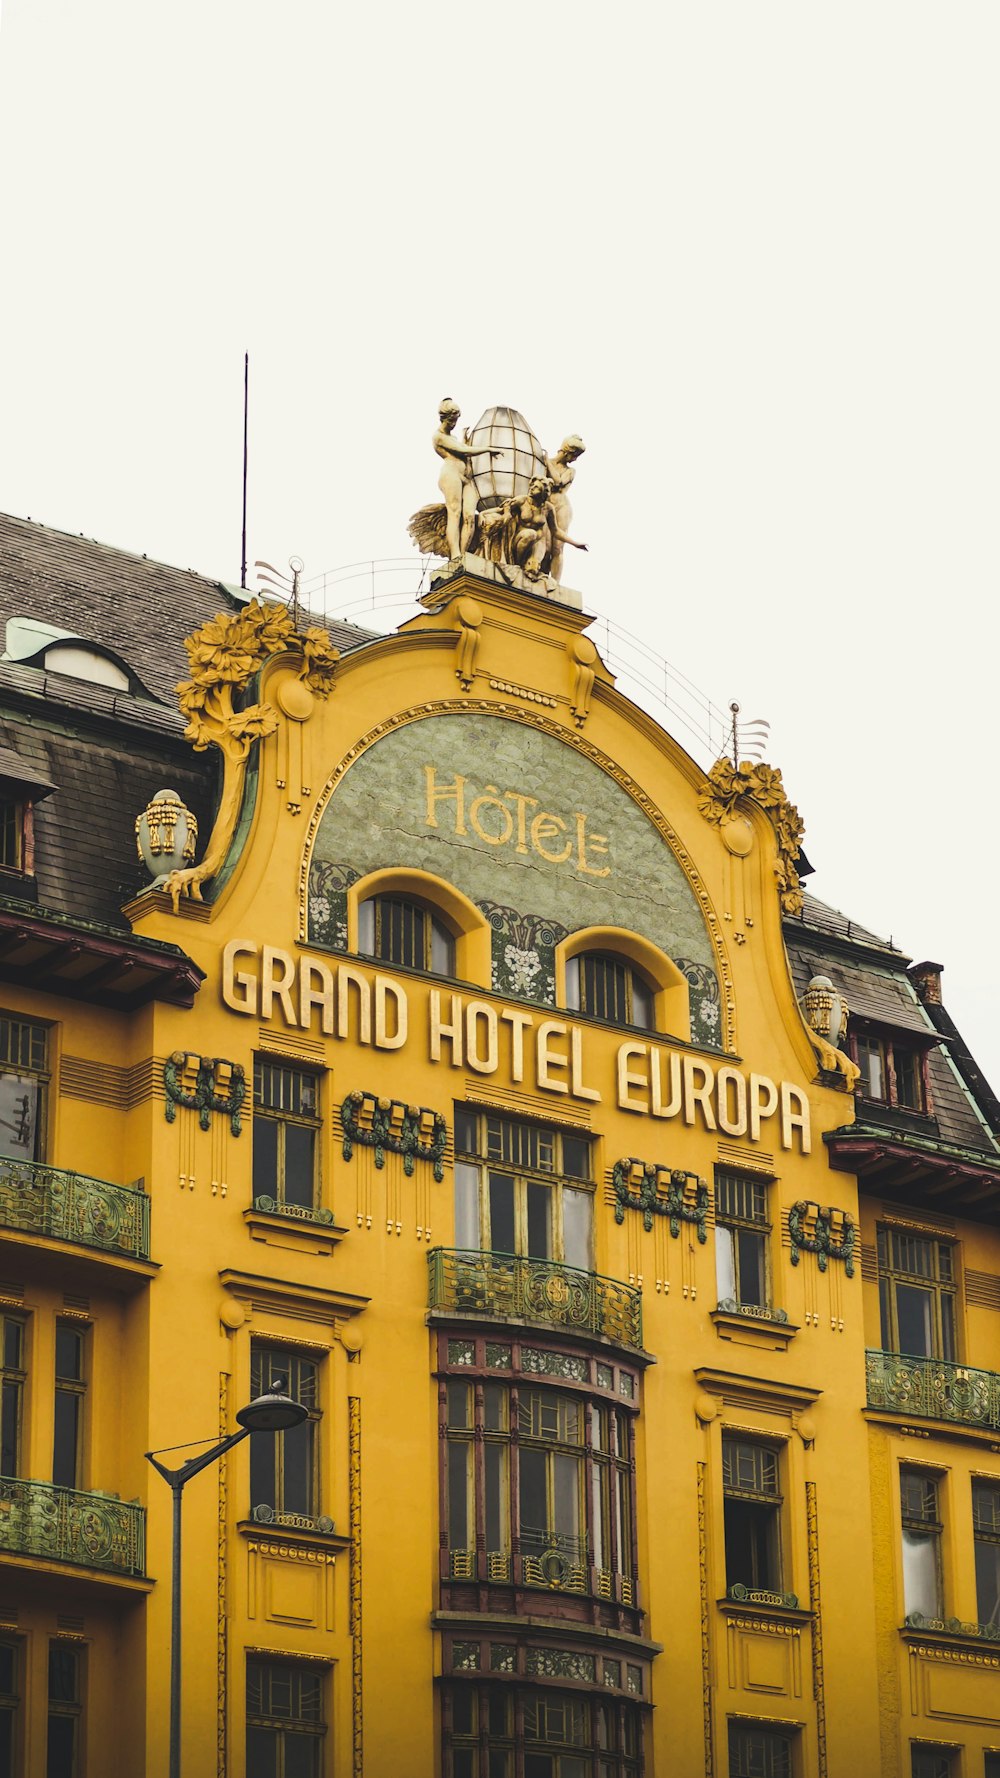 Grand Hotel Europa building